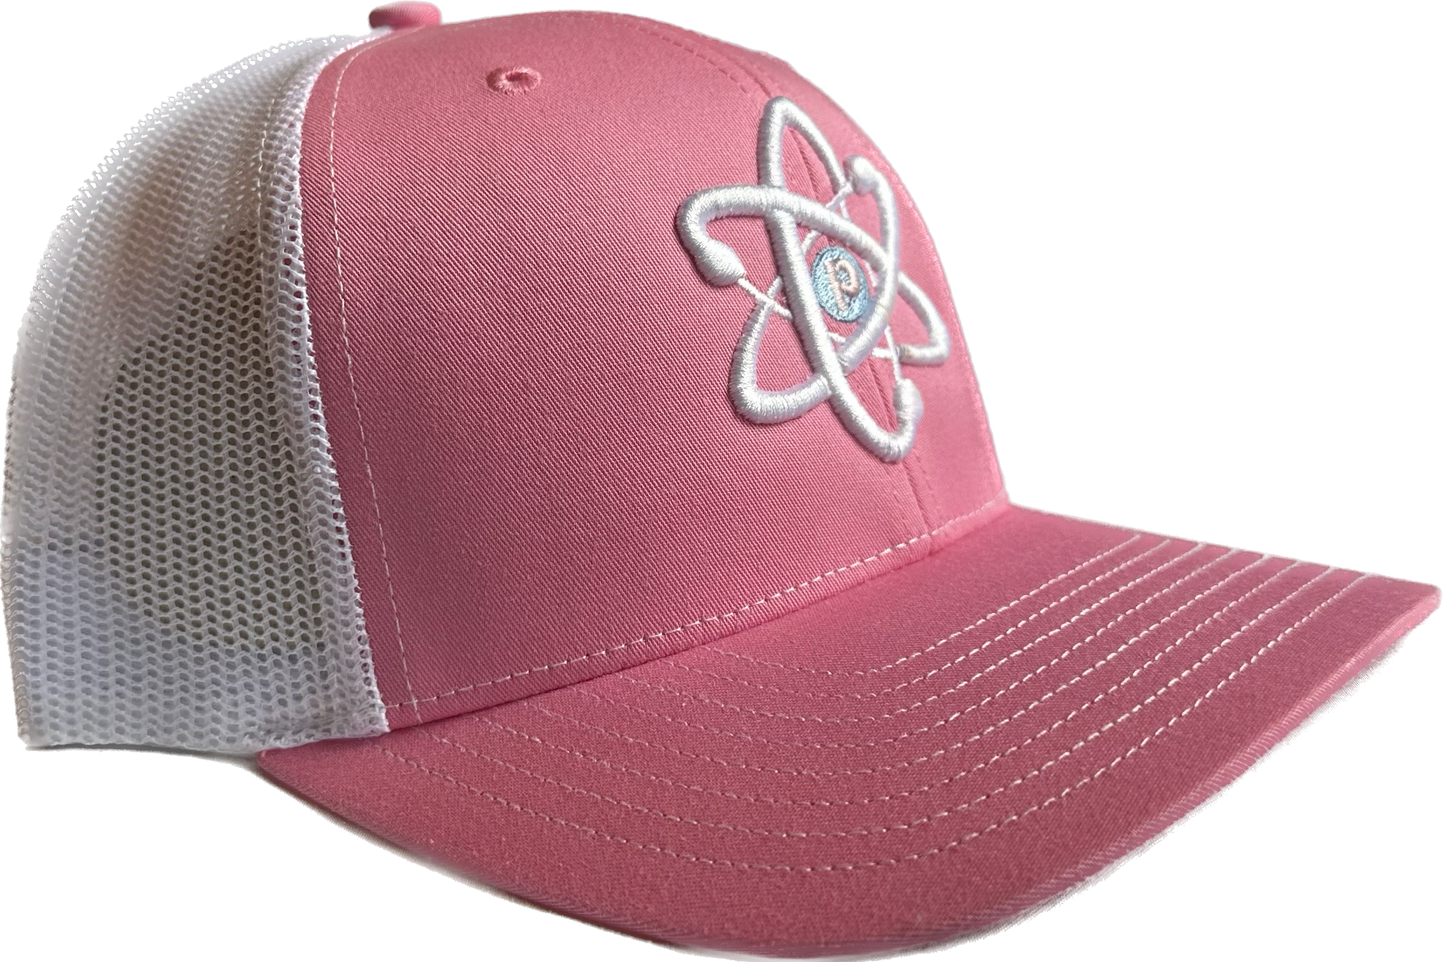 Atomic Snapback Hat